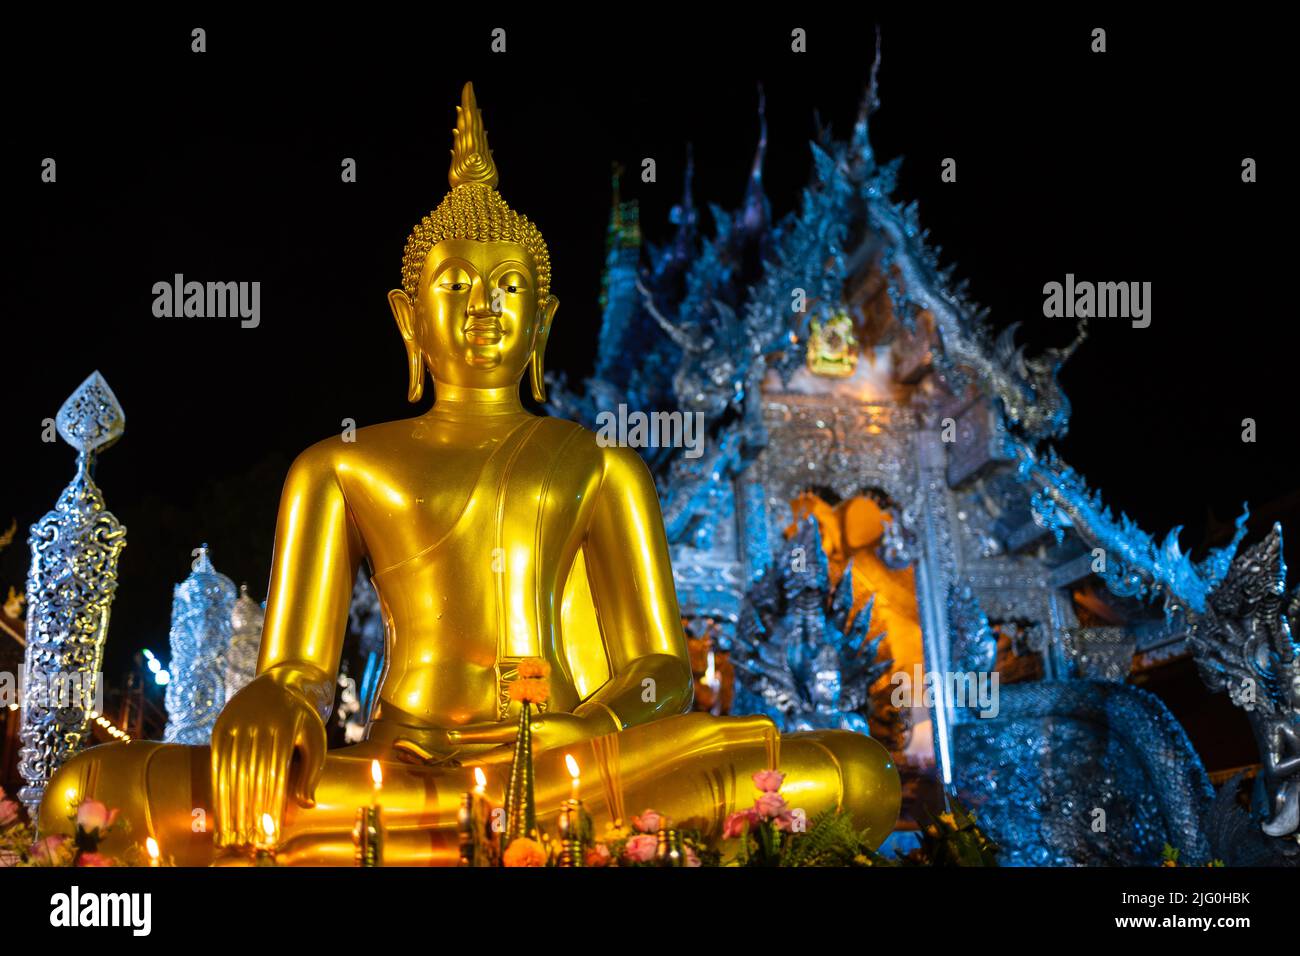 Night shot of the Wat Si Suphan silver temple illuminated at night, Chiang Mai, Thailand Stock Photo